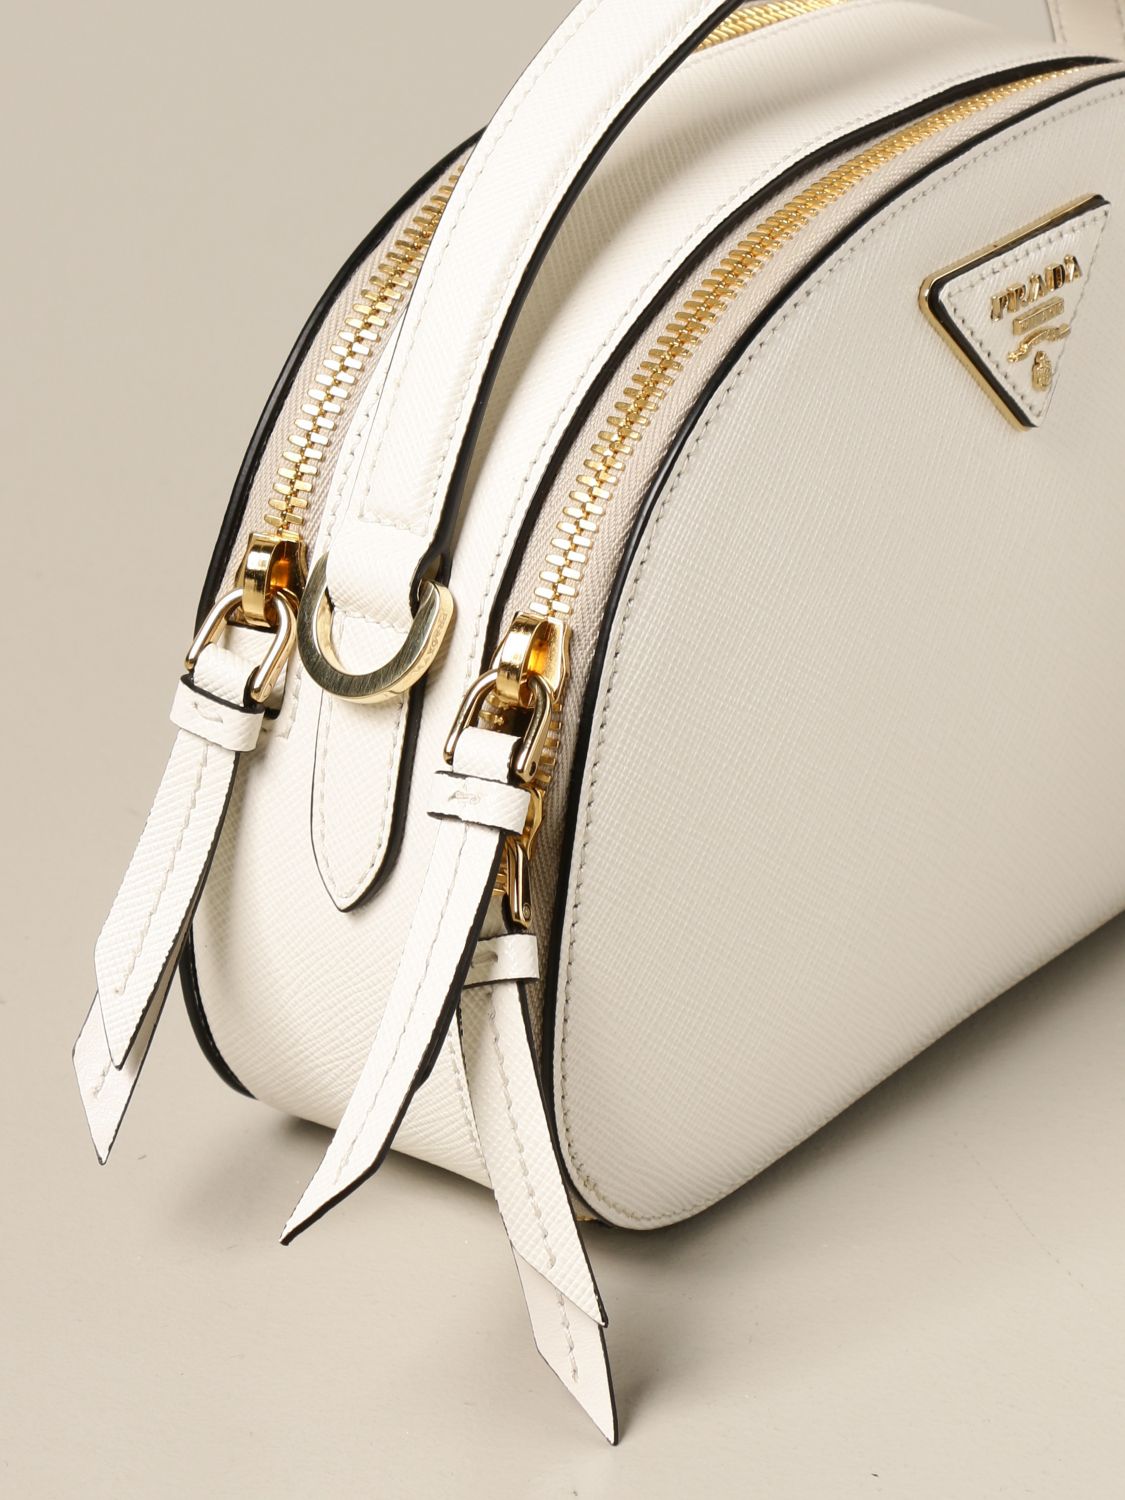 Shoulder bags Prada - Odette saffiano leather handbag - 1BH123NZVF0236